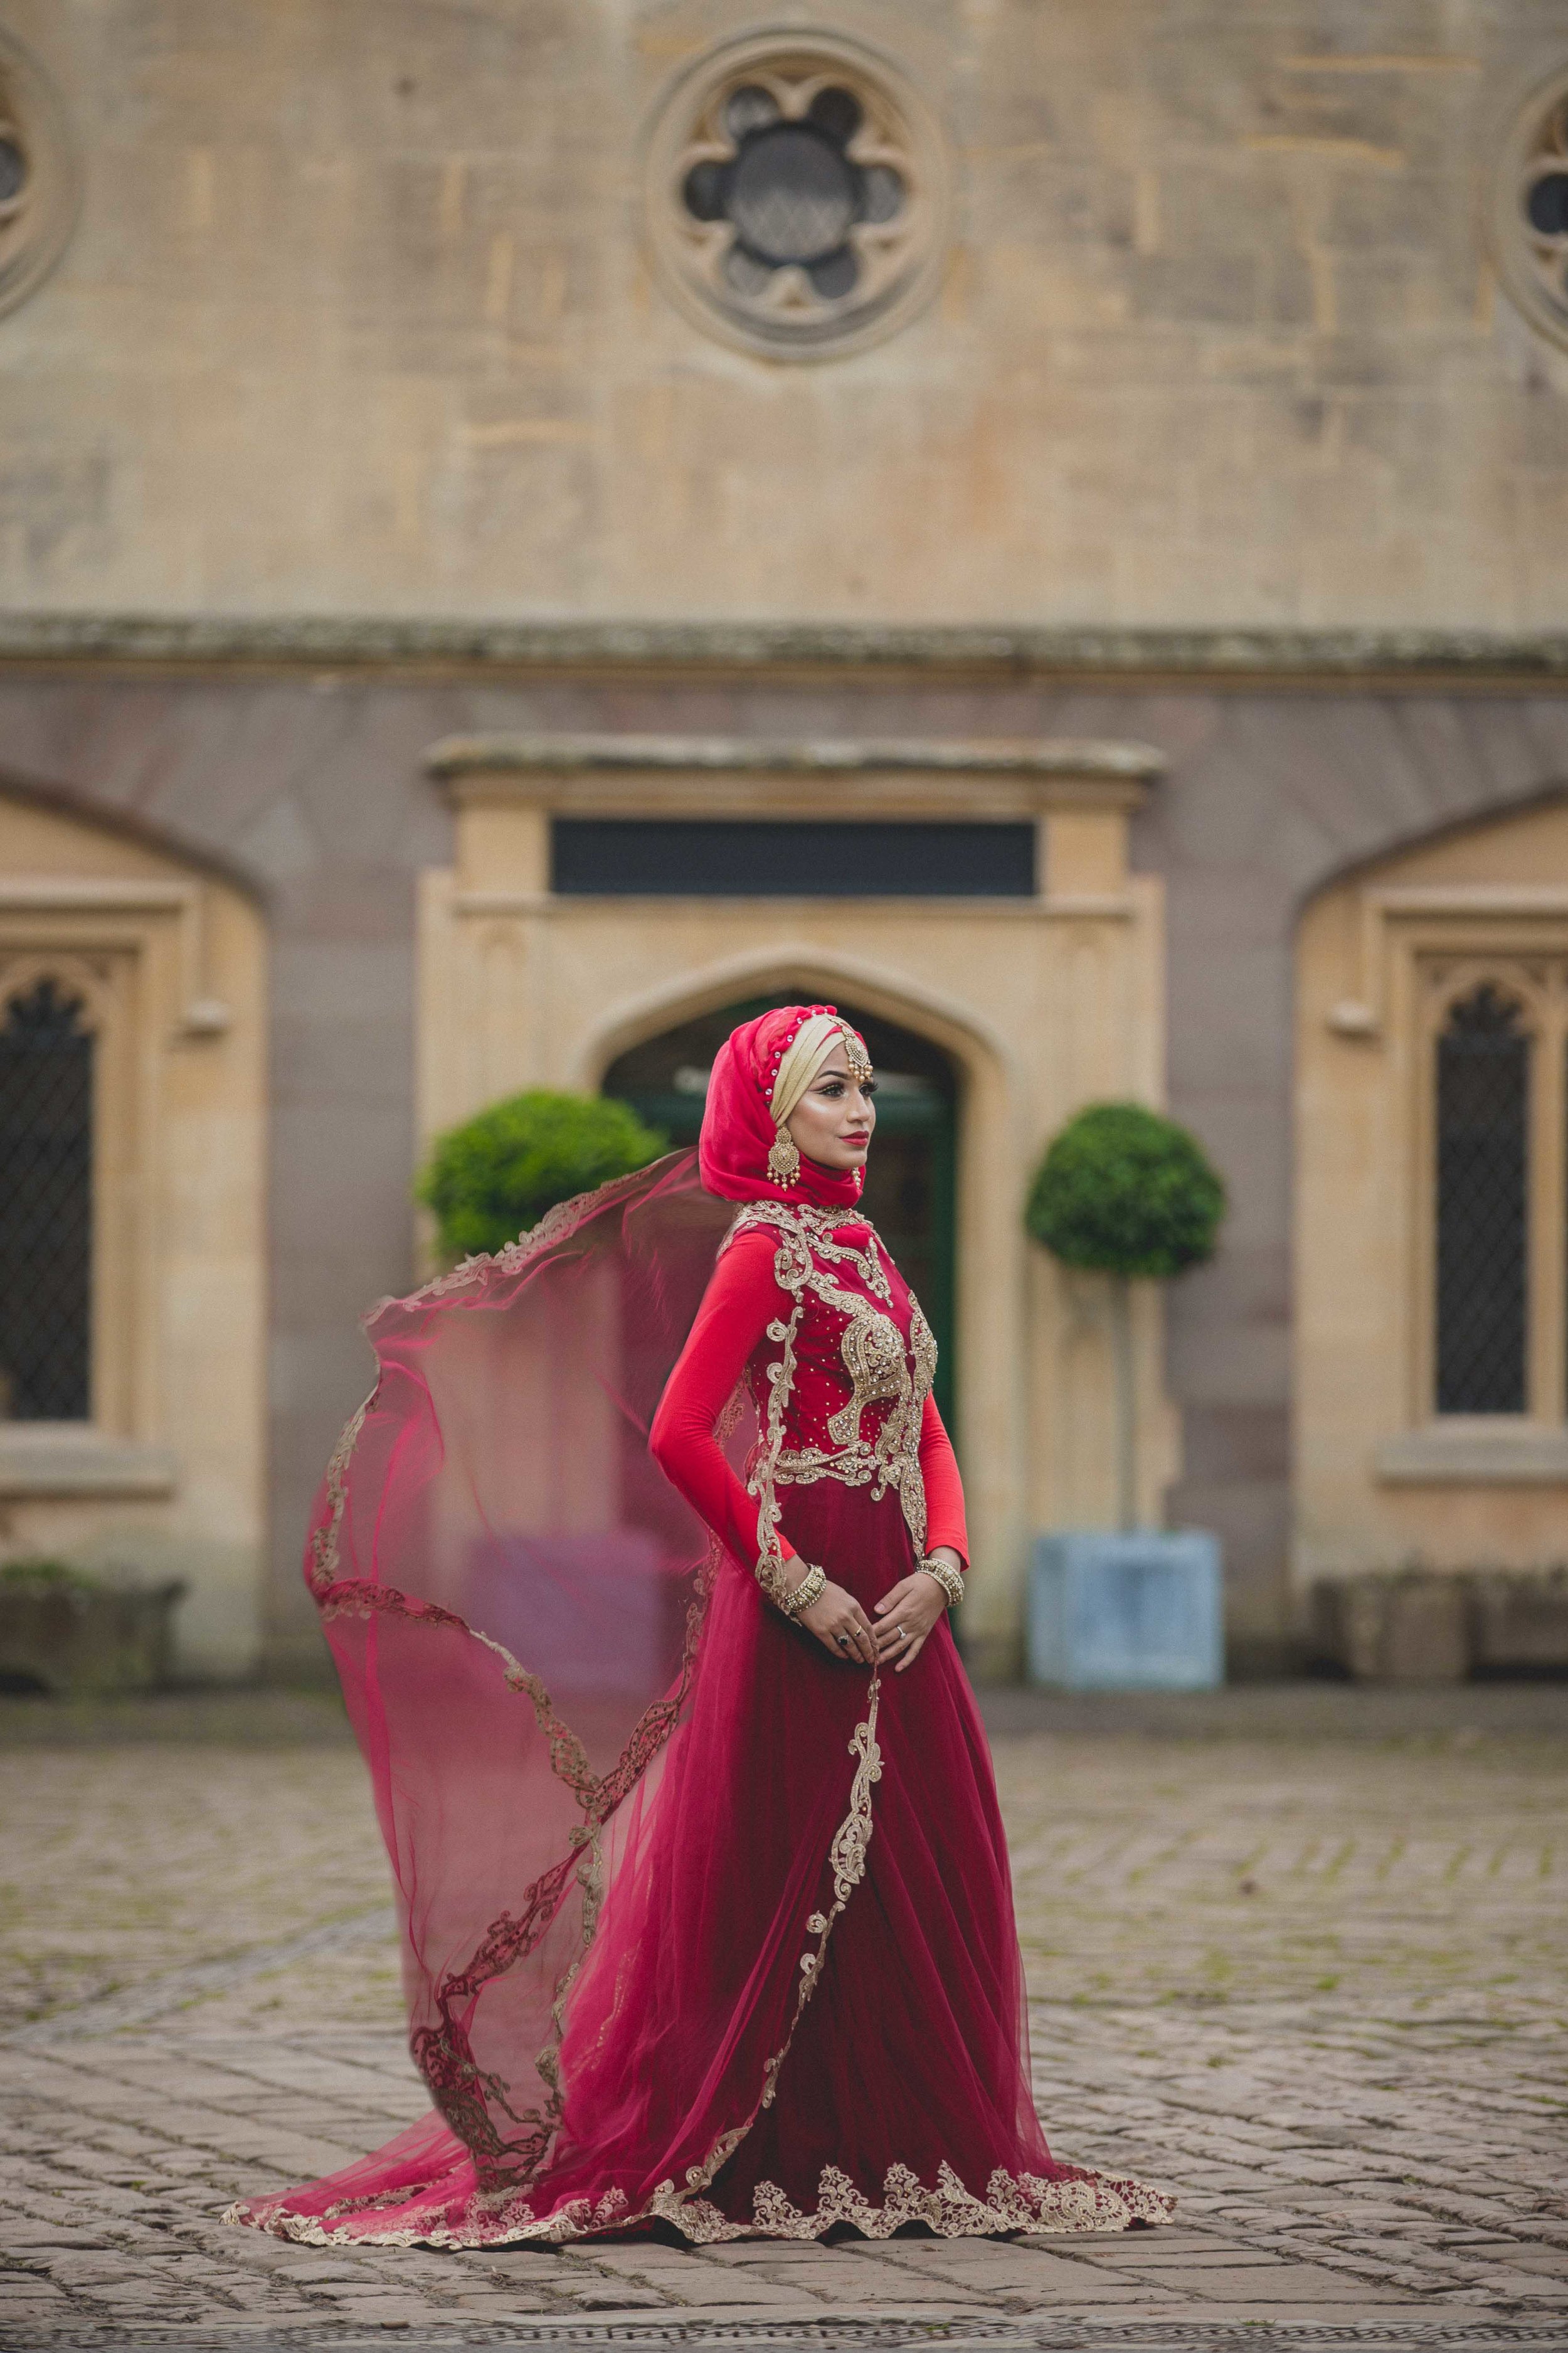 ashton-court-bristol-asian-bride-wedding-modest-street-aisha-rahman-fashion-photography-london-bristol-natalia-smith-photography-15.jpg